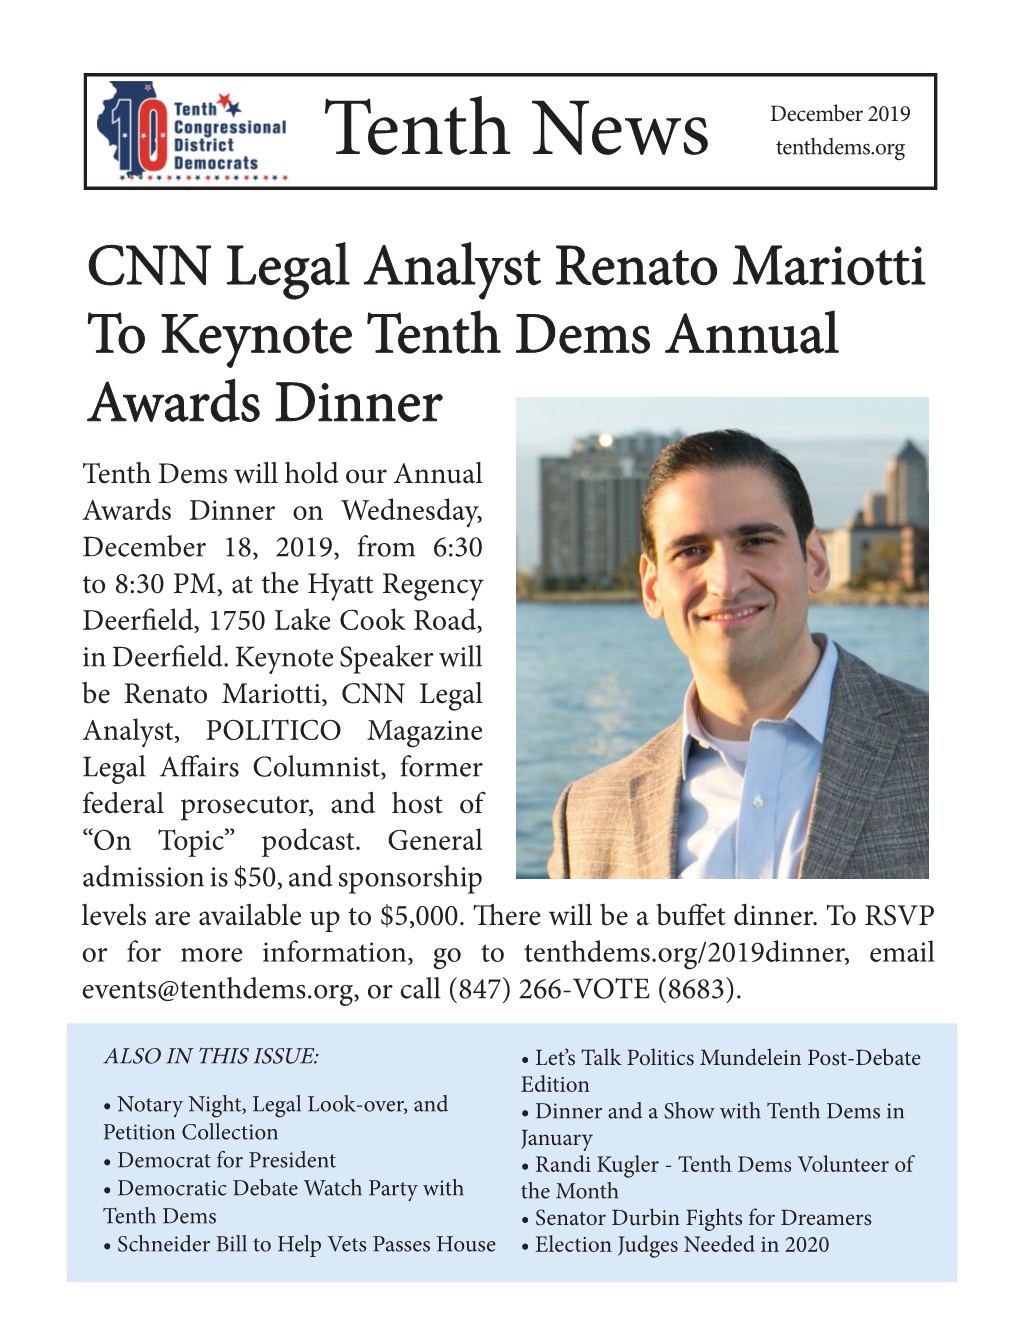 CNN Legal Analyst Renato Mariotti to Keynote Tenth Dems Annual